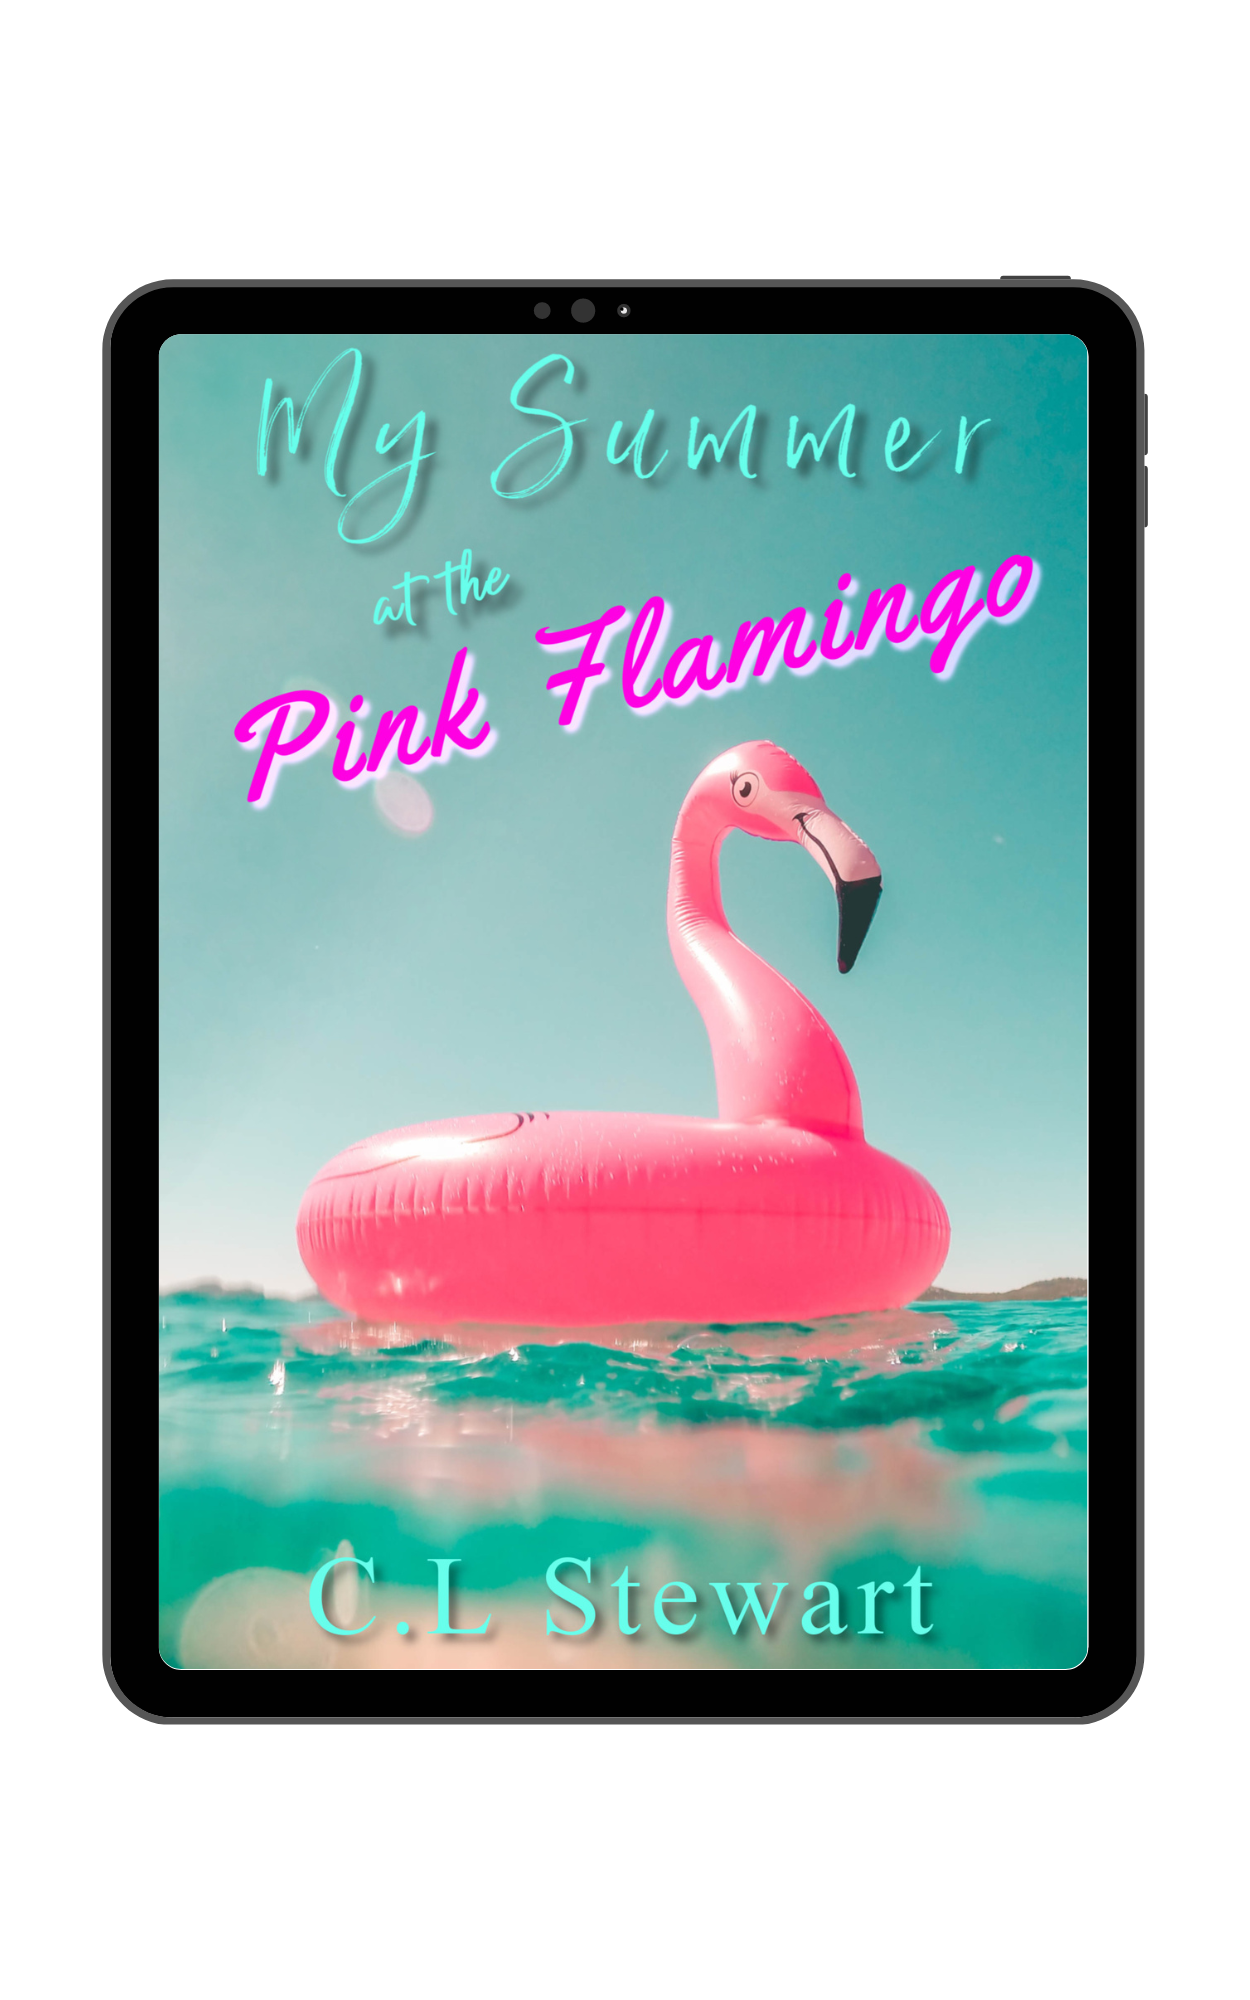 My Summer at the Pink Flamingo